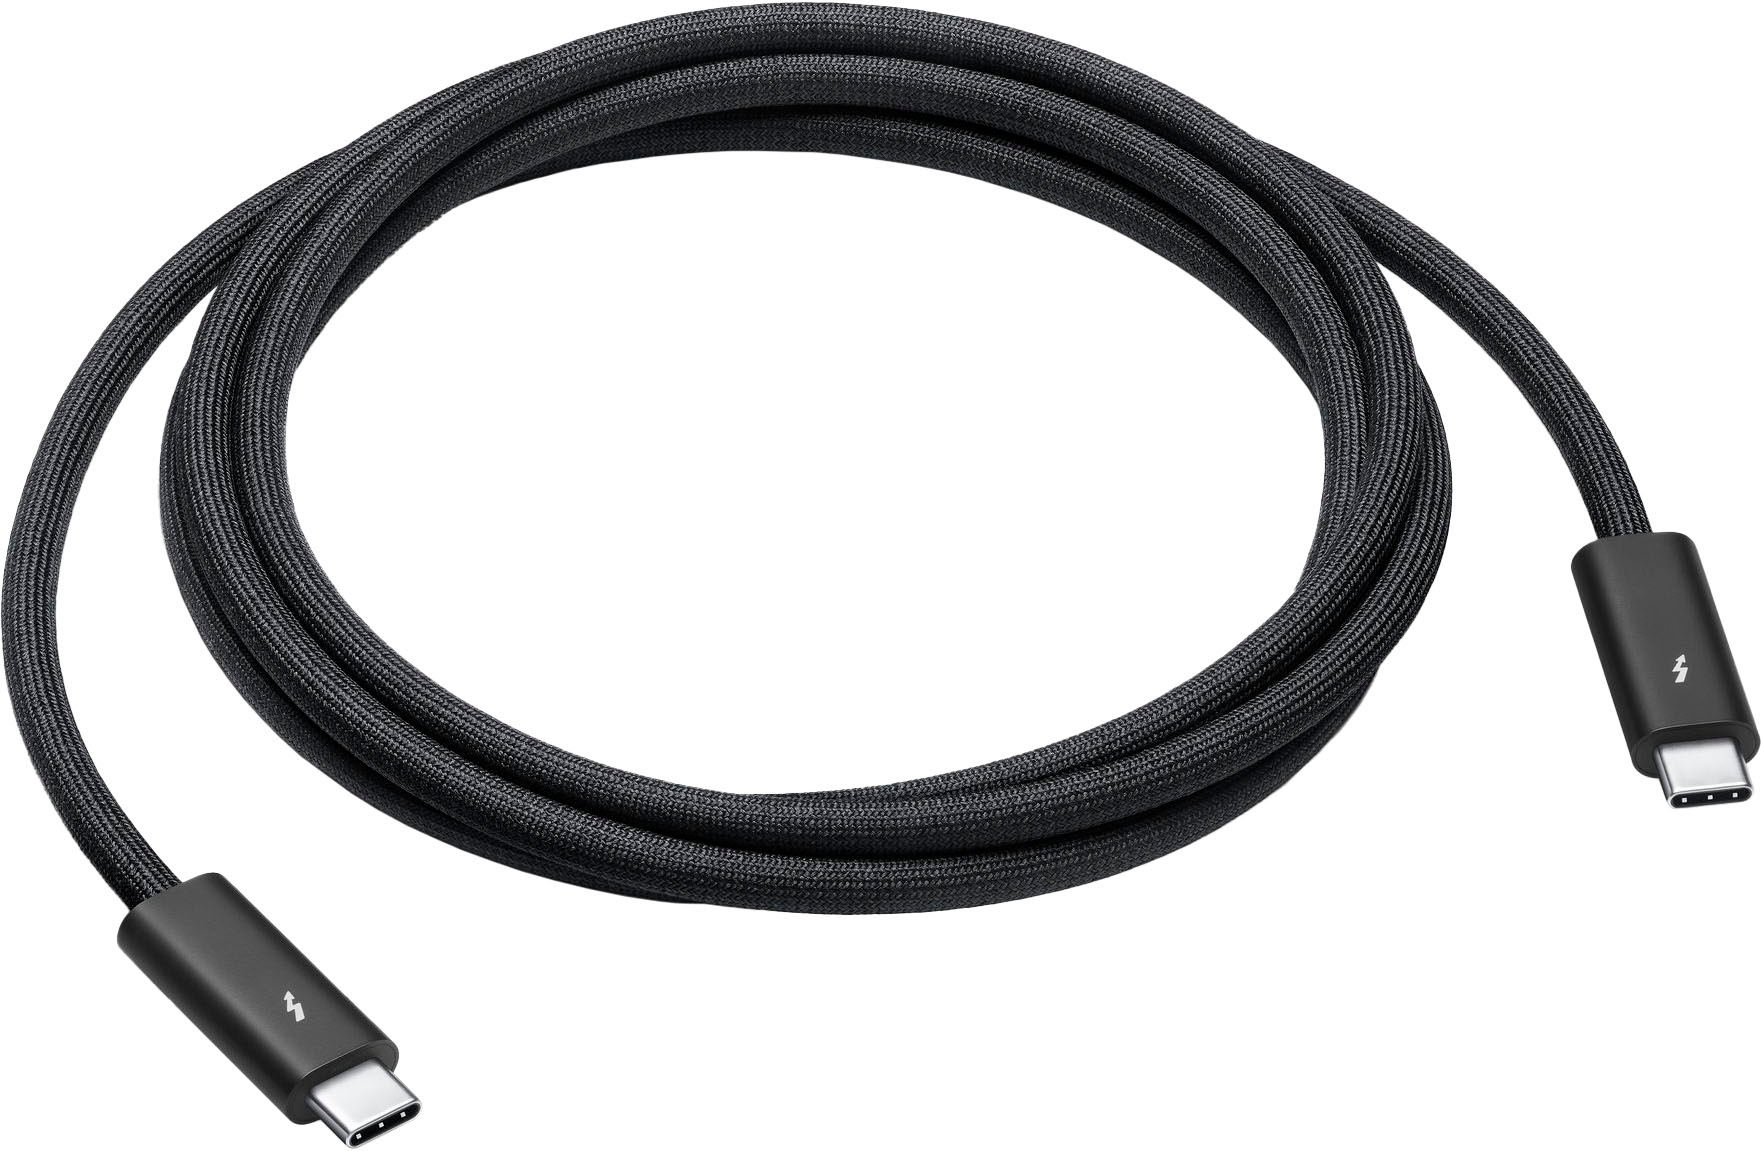 Apple Thunderbolt 4 Pro Cable, Black, 1.8m